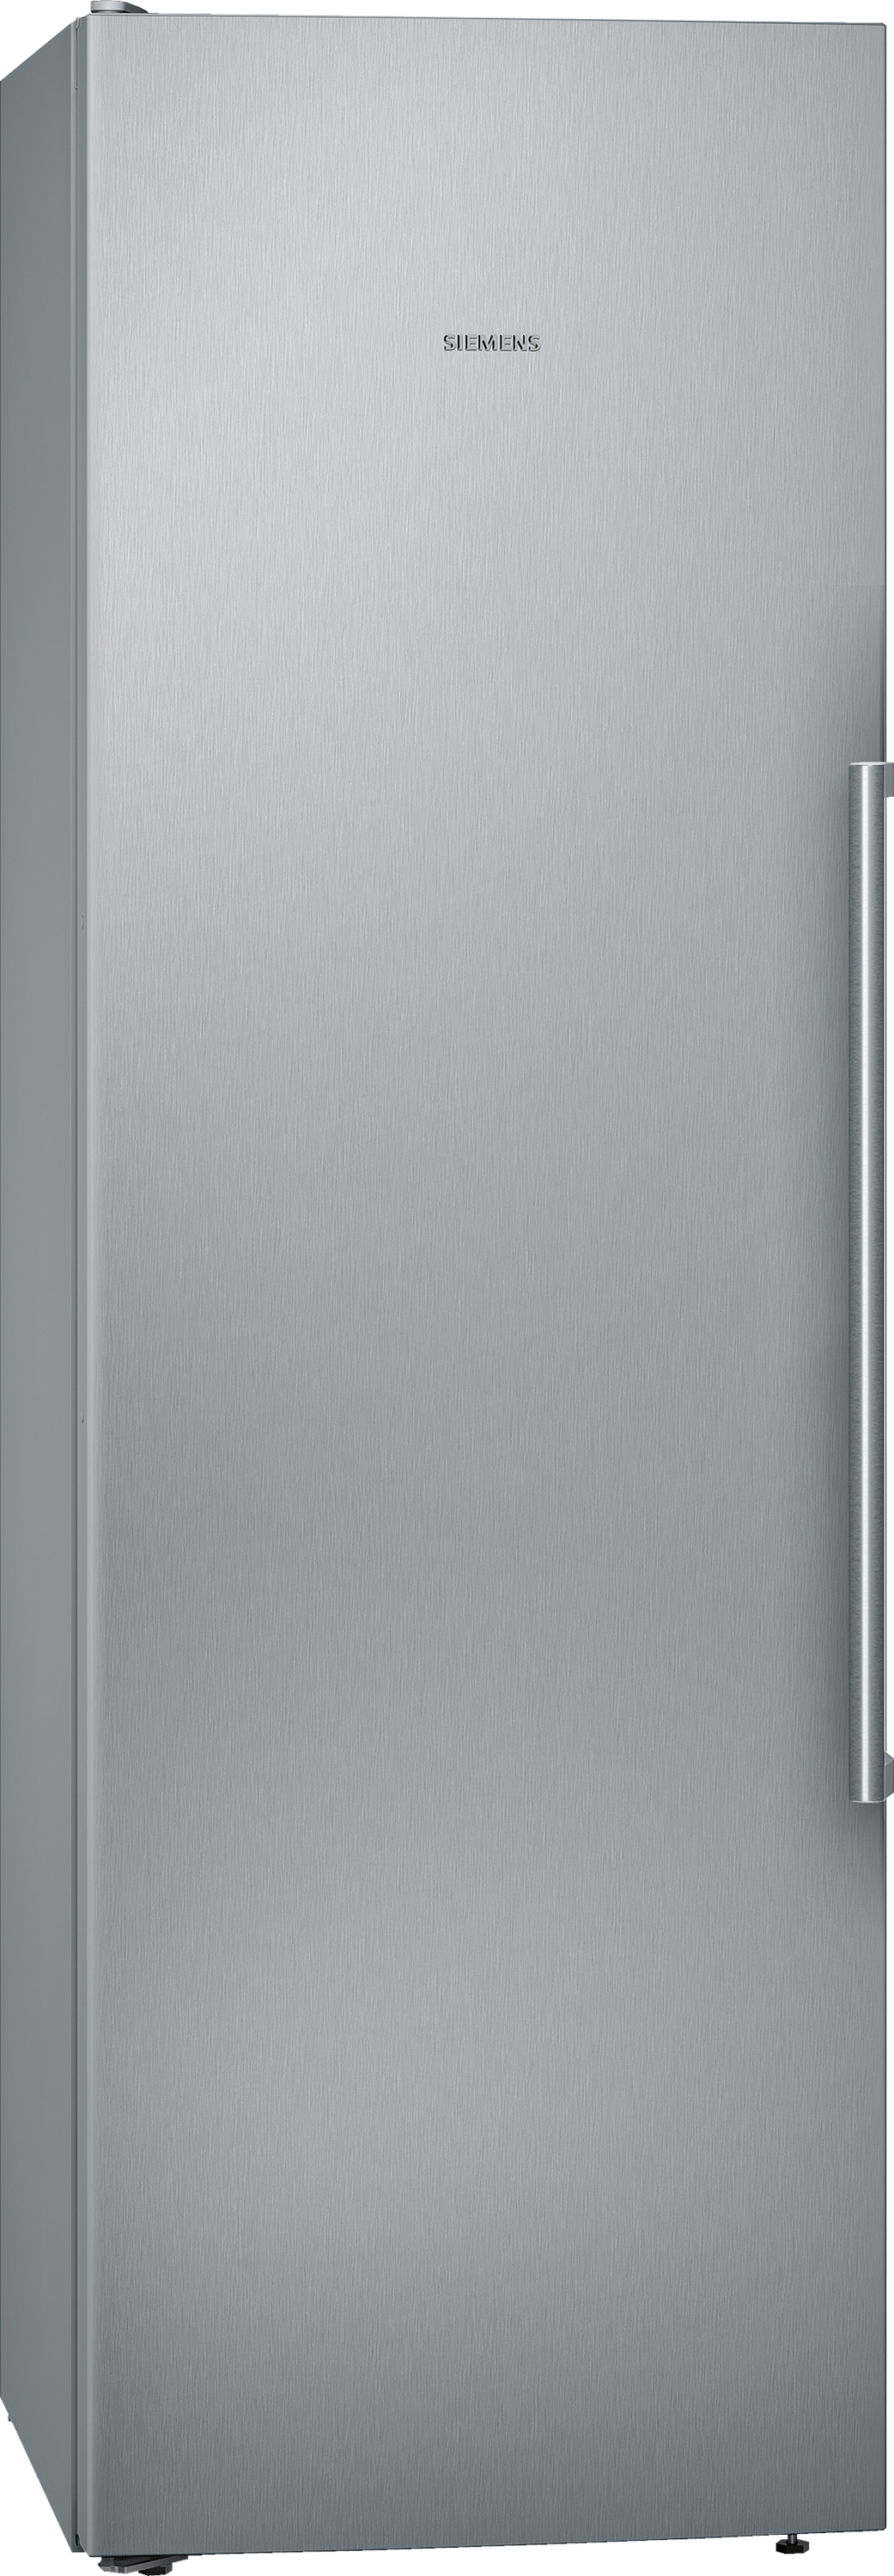 Siemens iQ700, Freistehender Kühlschrank, 186 x 60 cm, Edelstahl antiFingerprint, KS36FPIDP